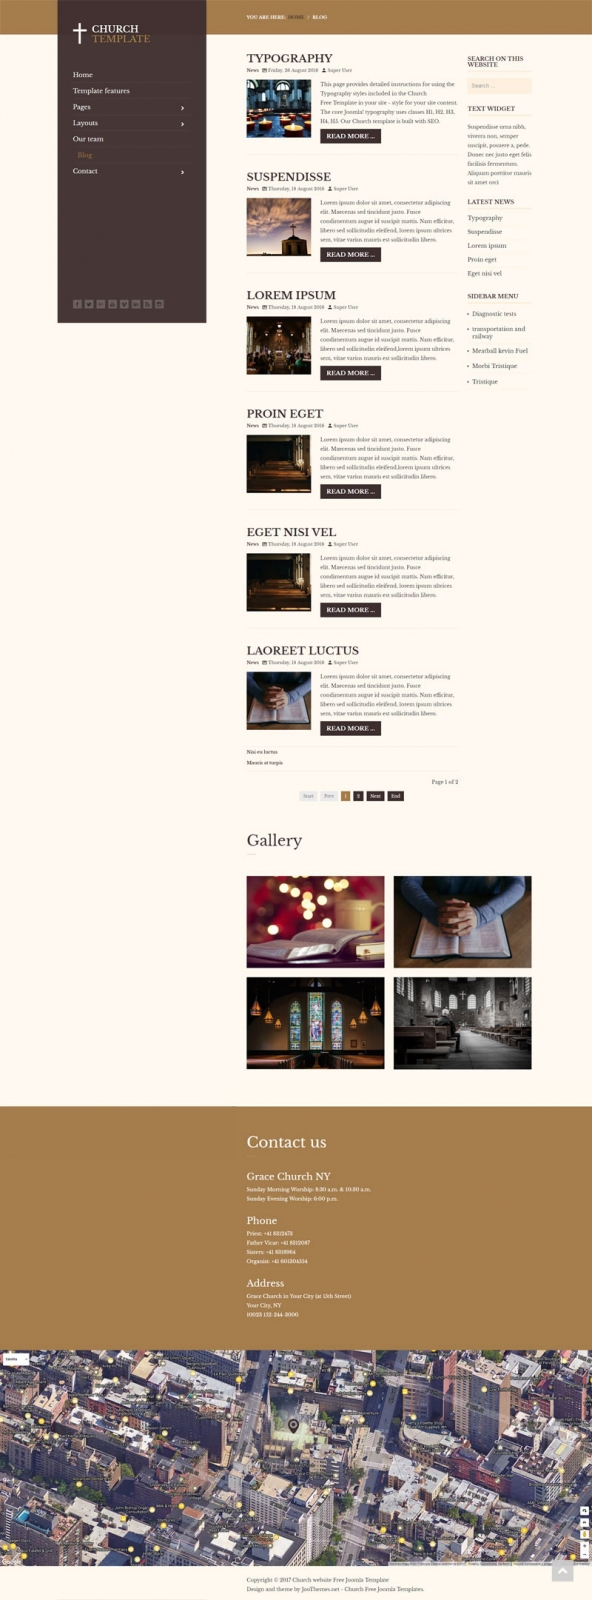 Blog category Joomla layout.
